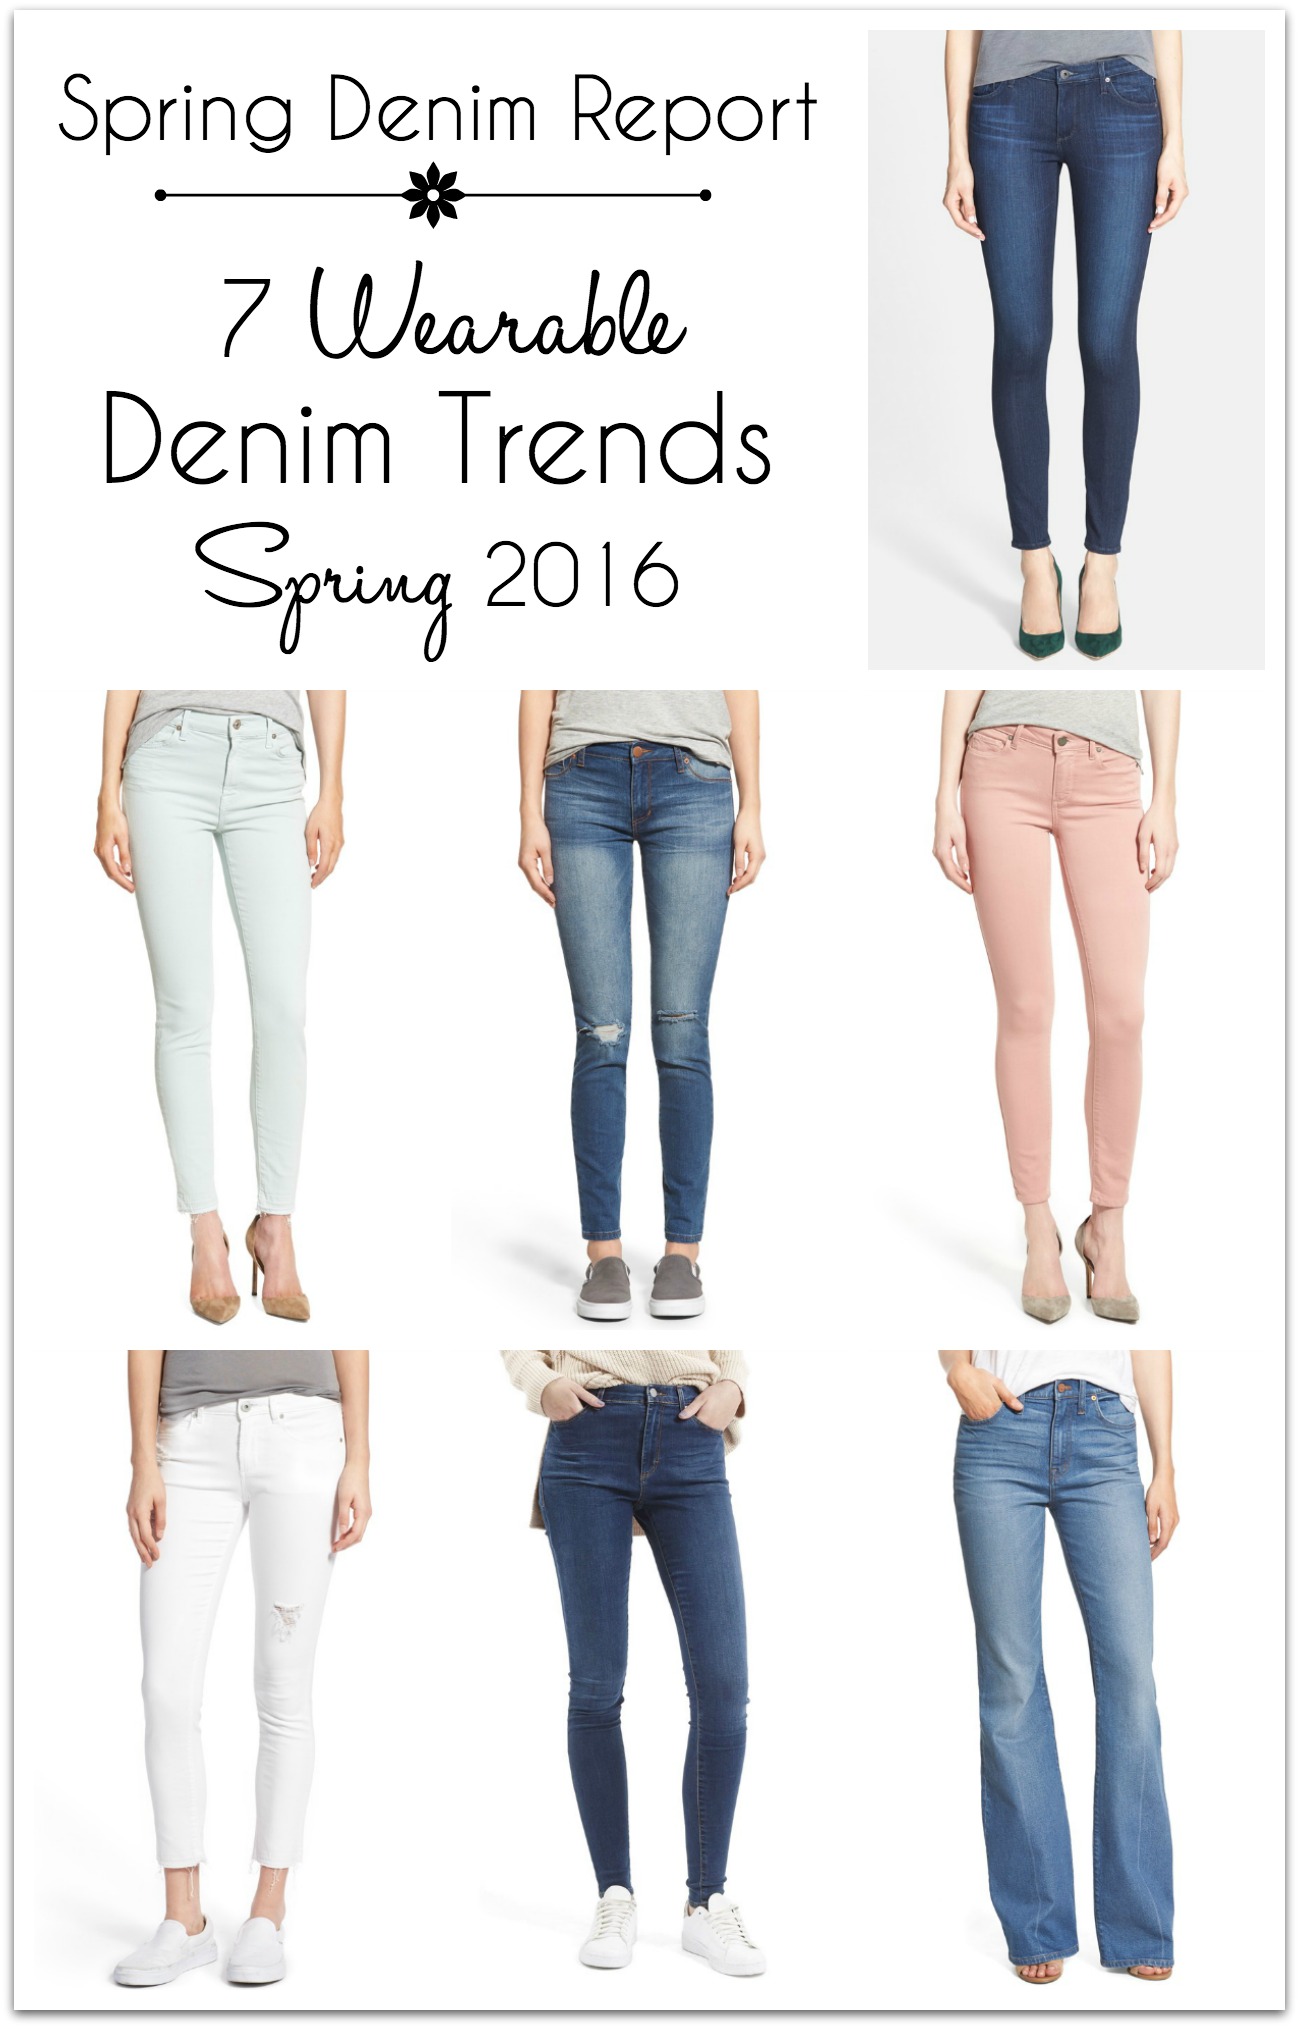 Spring Denim Report: 7 Wearable Spring Denim Trends 2016